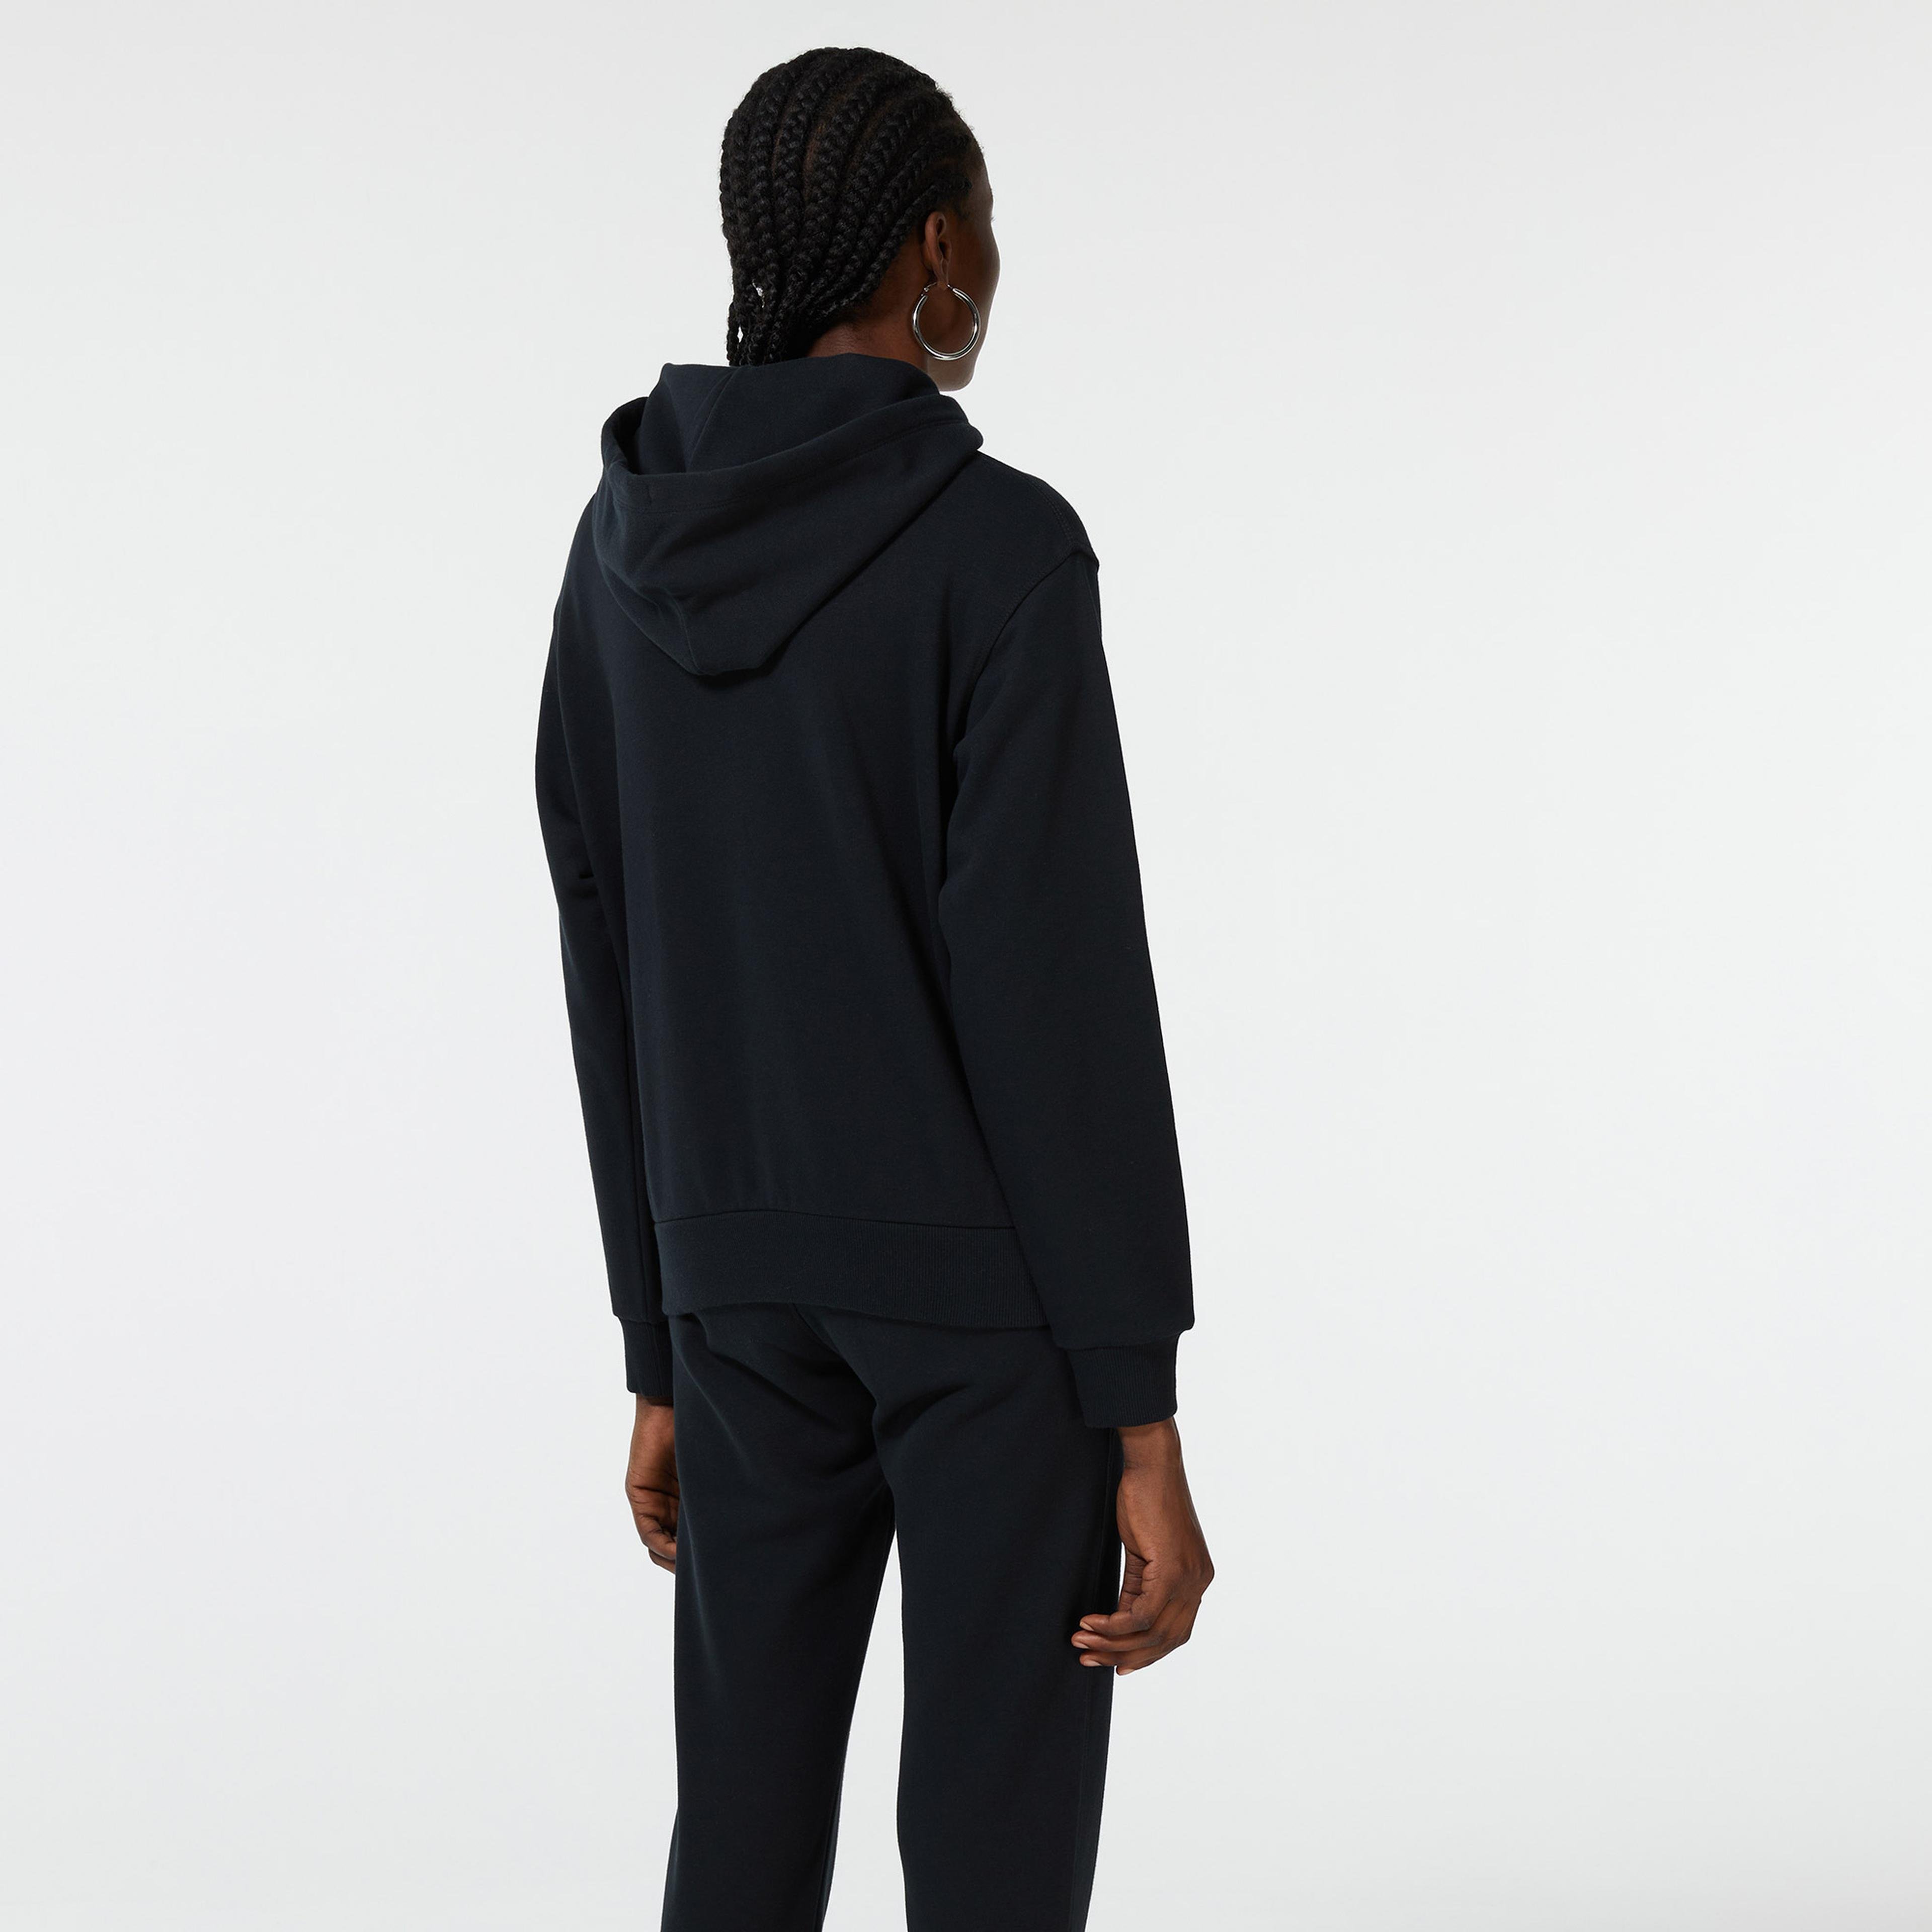 Converse Embroidered Star Chevron Kadın Siyah Sweatshirt